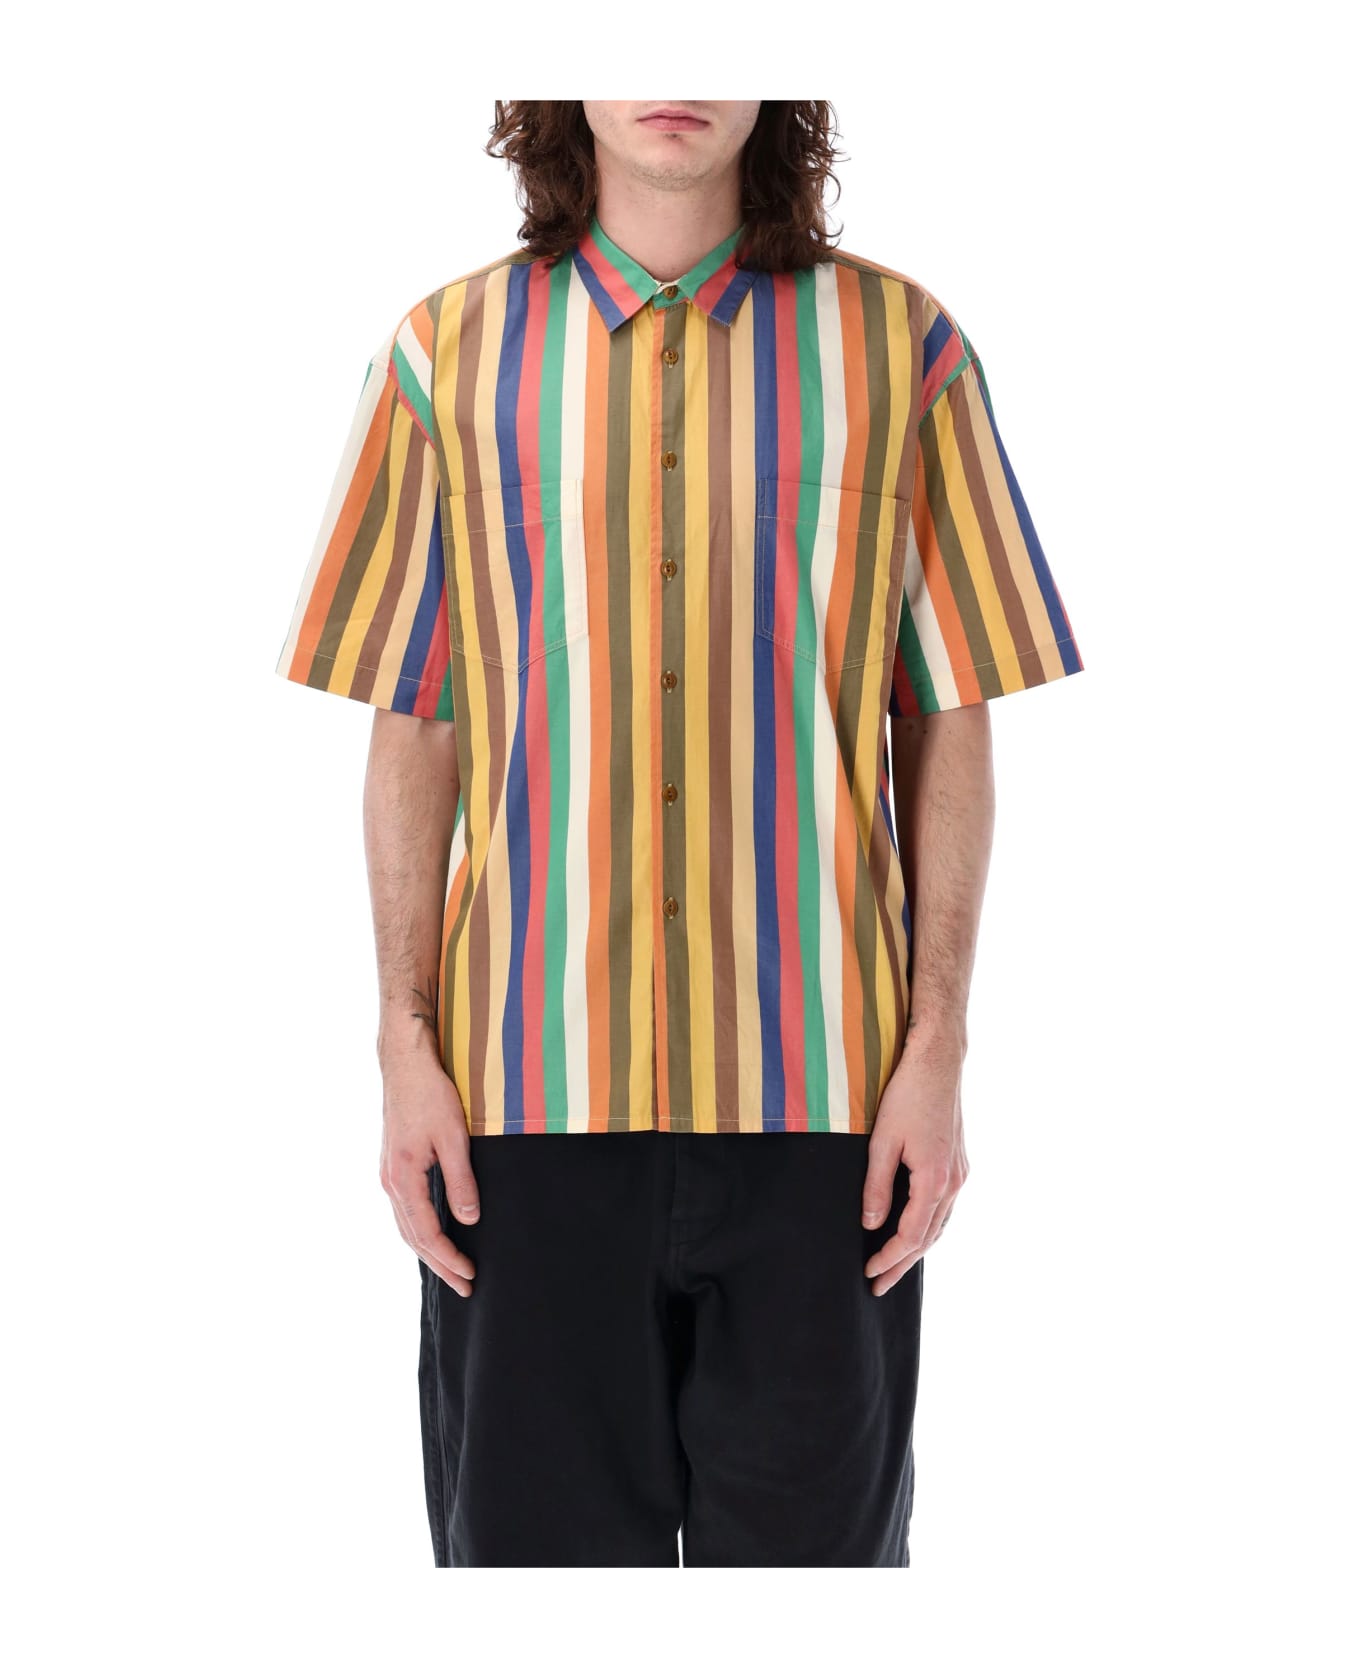 YMC Mitchum Shirt - STRIPE MULTI